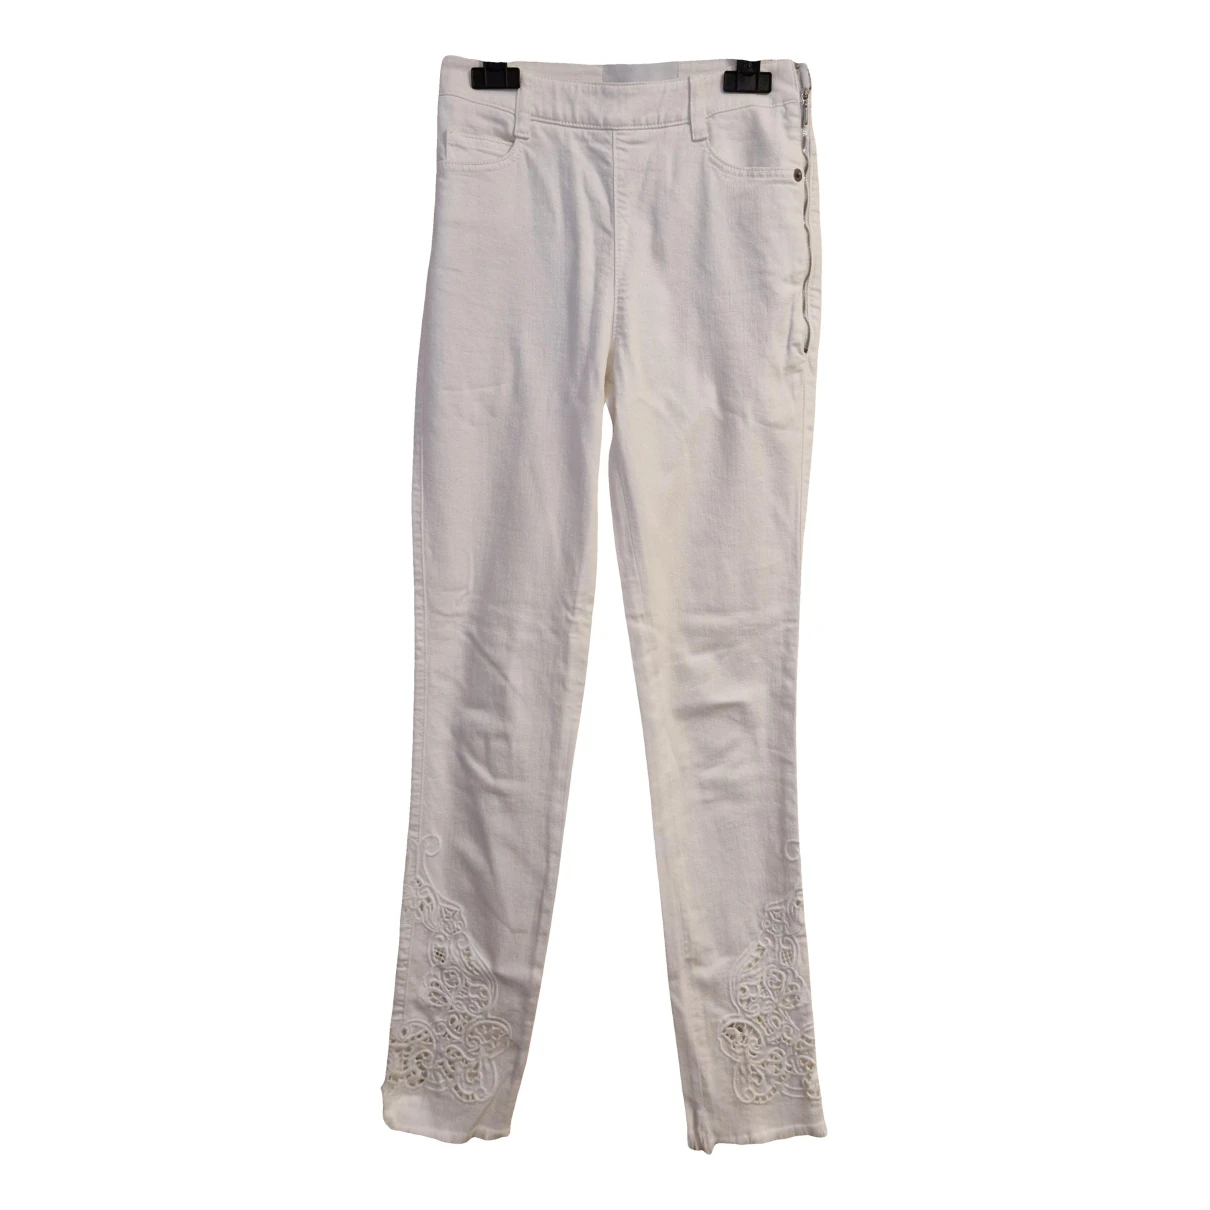 Pre-owned Ermanno Scervino Slim Jeans In White